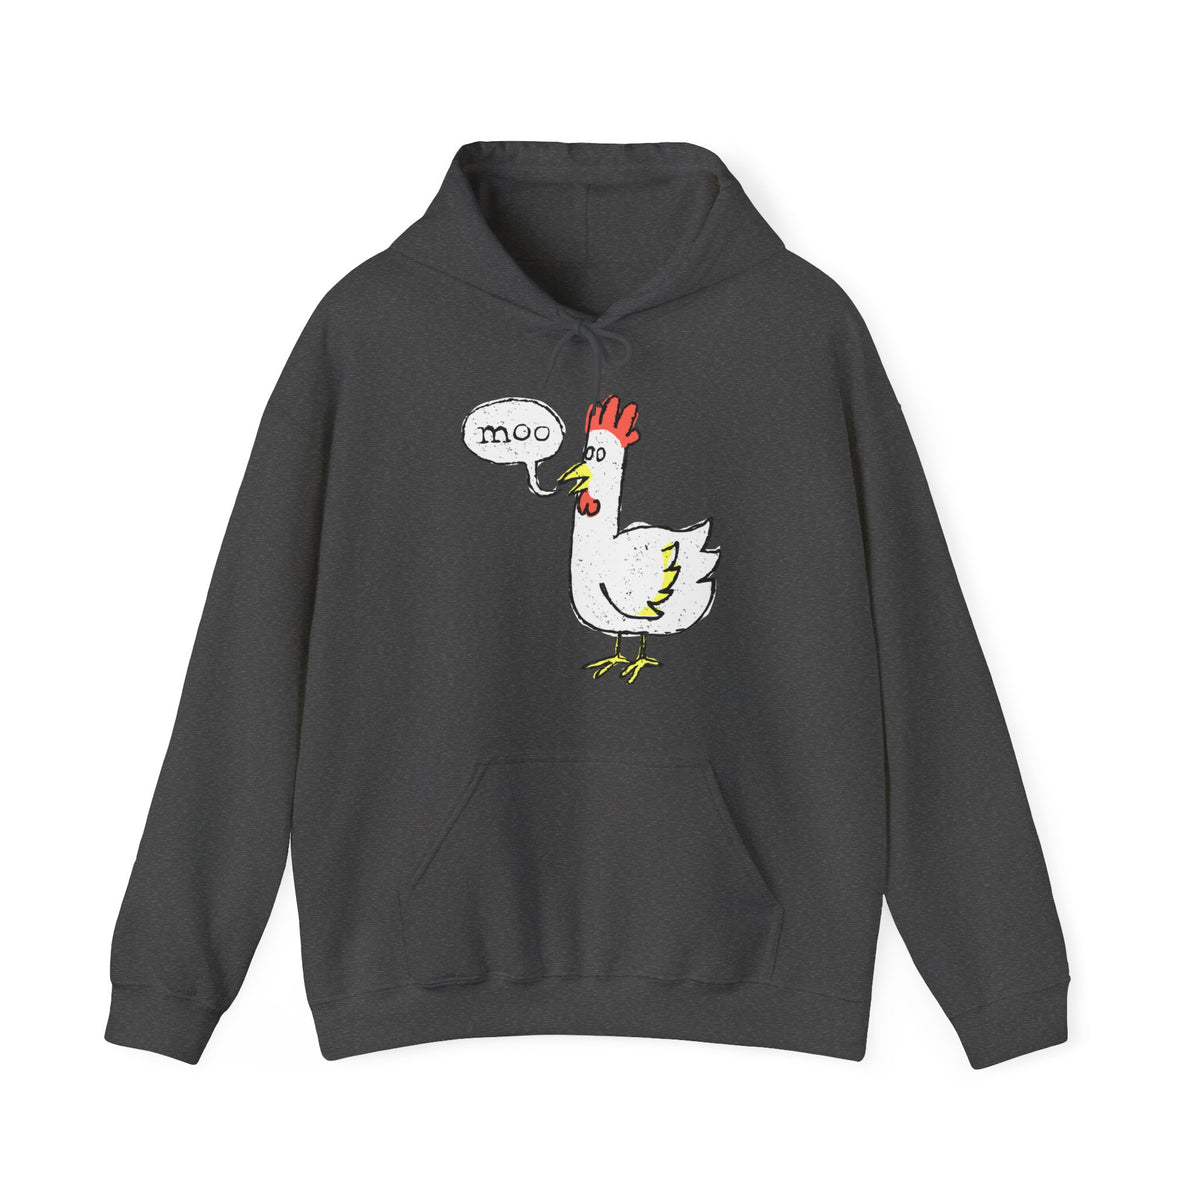 Moo (Chicken) - Hoodie